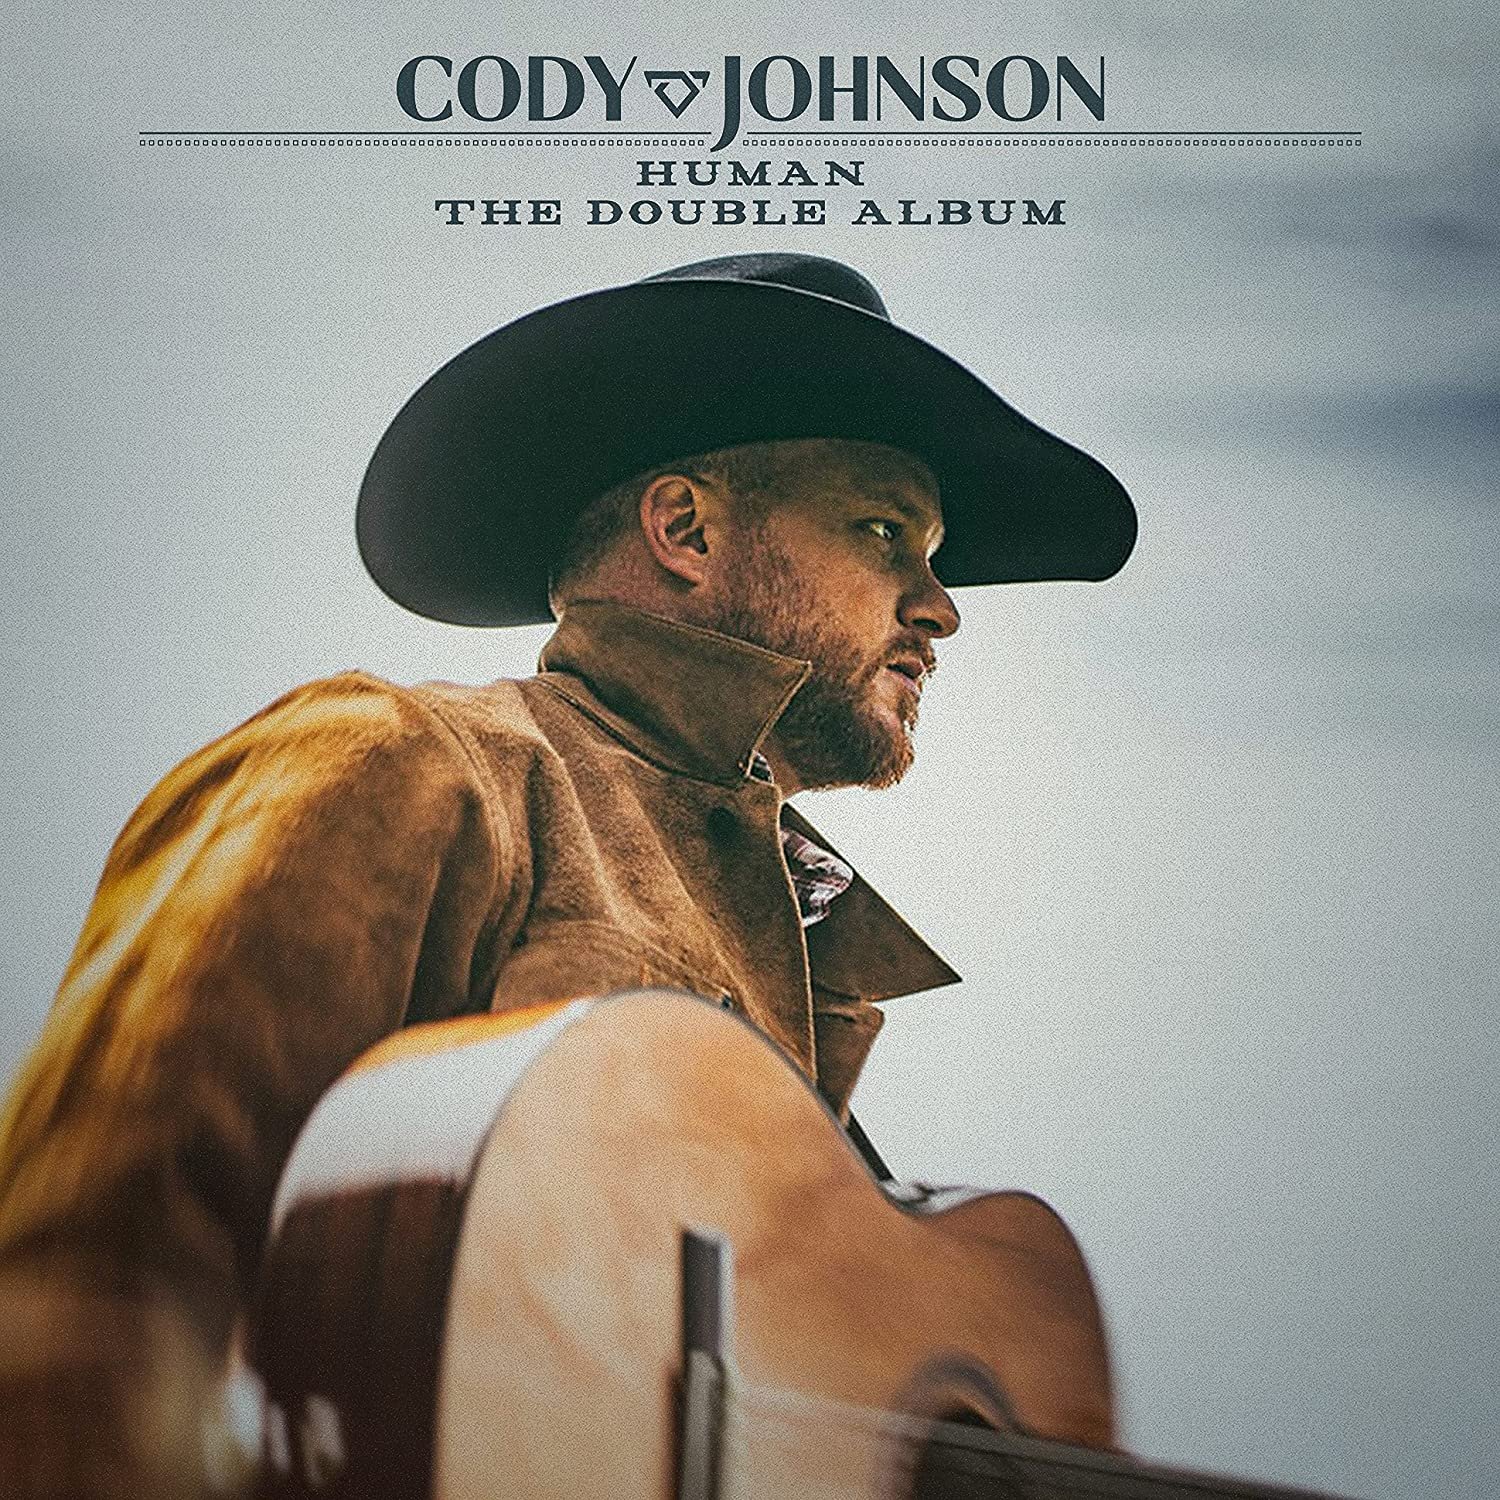 Cody Johnson - Human: The Double Album